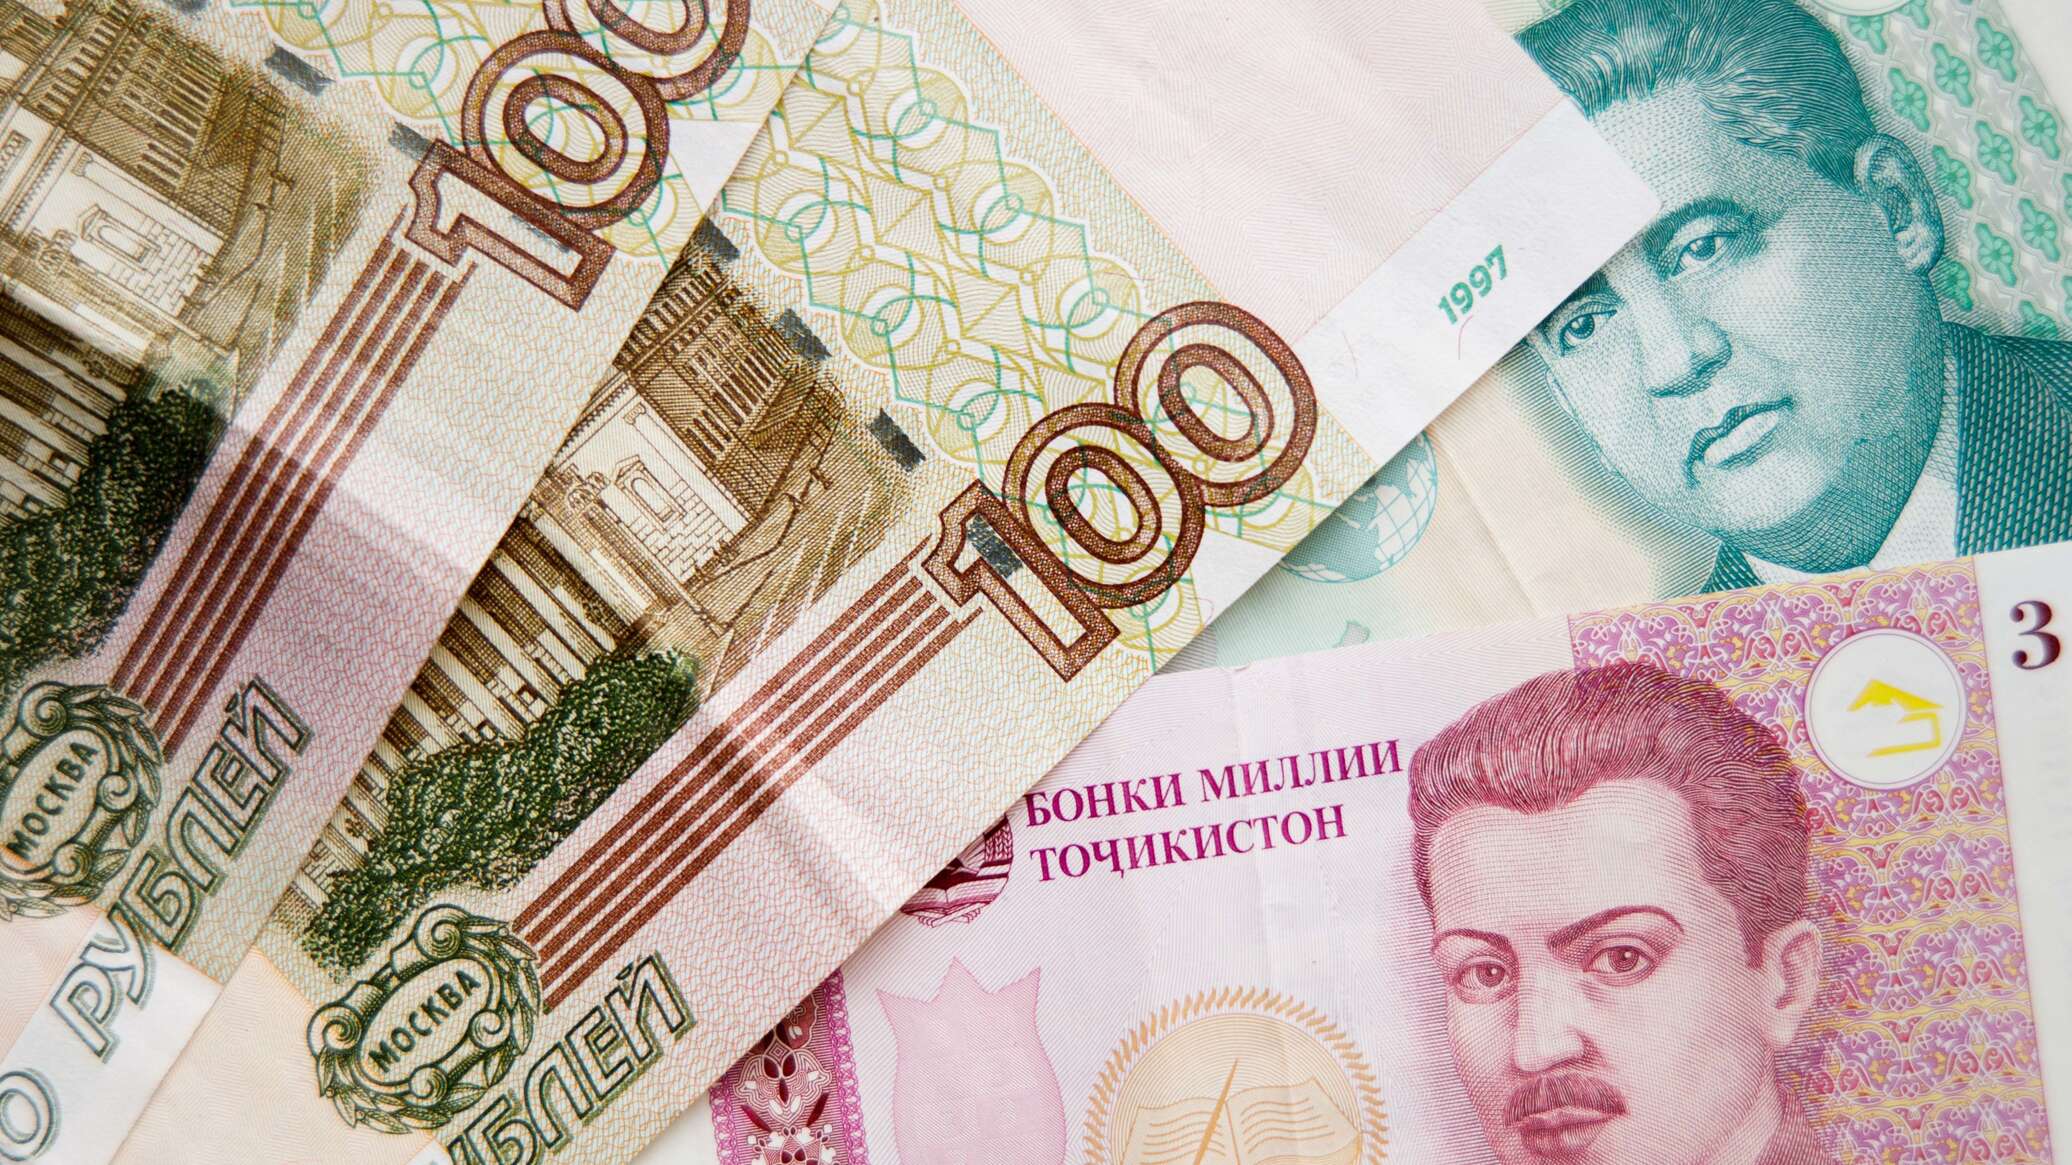 Валют рубл таджикистане сомони. Валюта Таджикистан 1000 рублей на Сомони. 1000 Рублей в Сомони в Таджикистане. Таджикские деньги. Таджикская валюта.